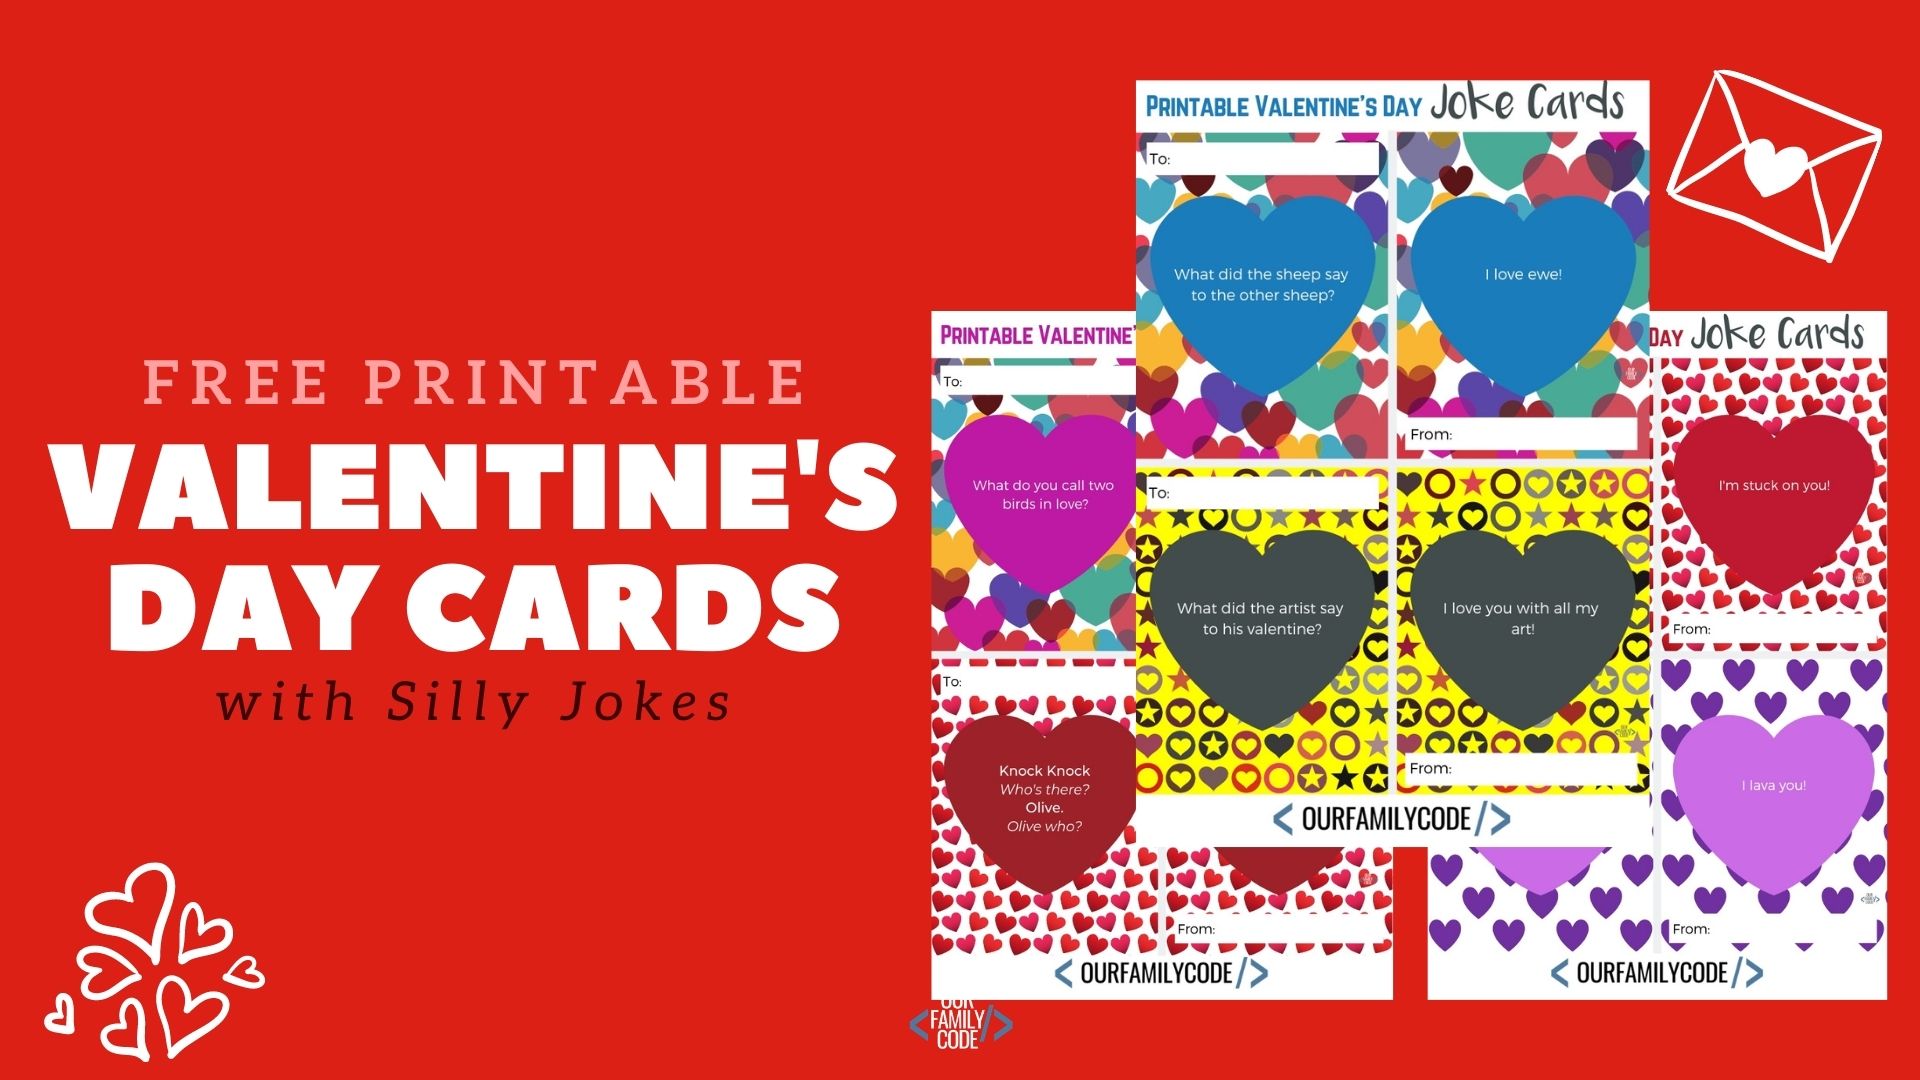 Free printable Valentine's Day joke cards